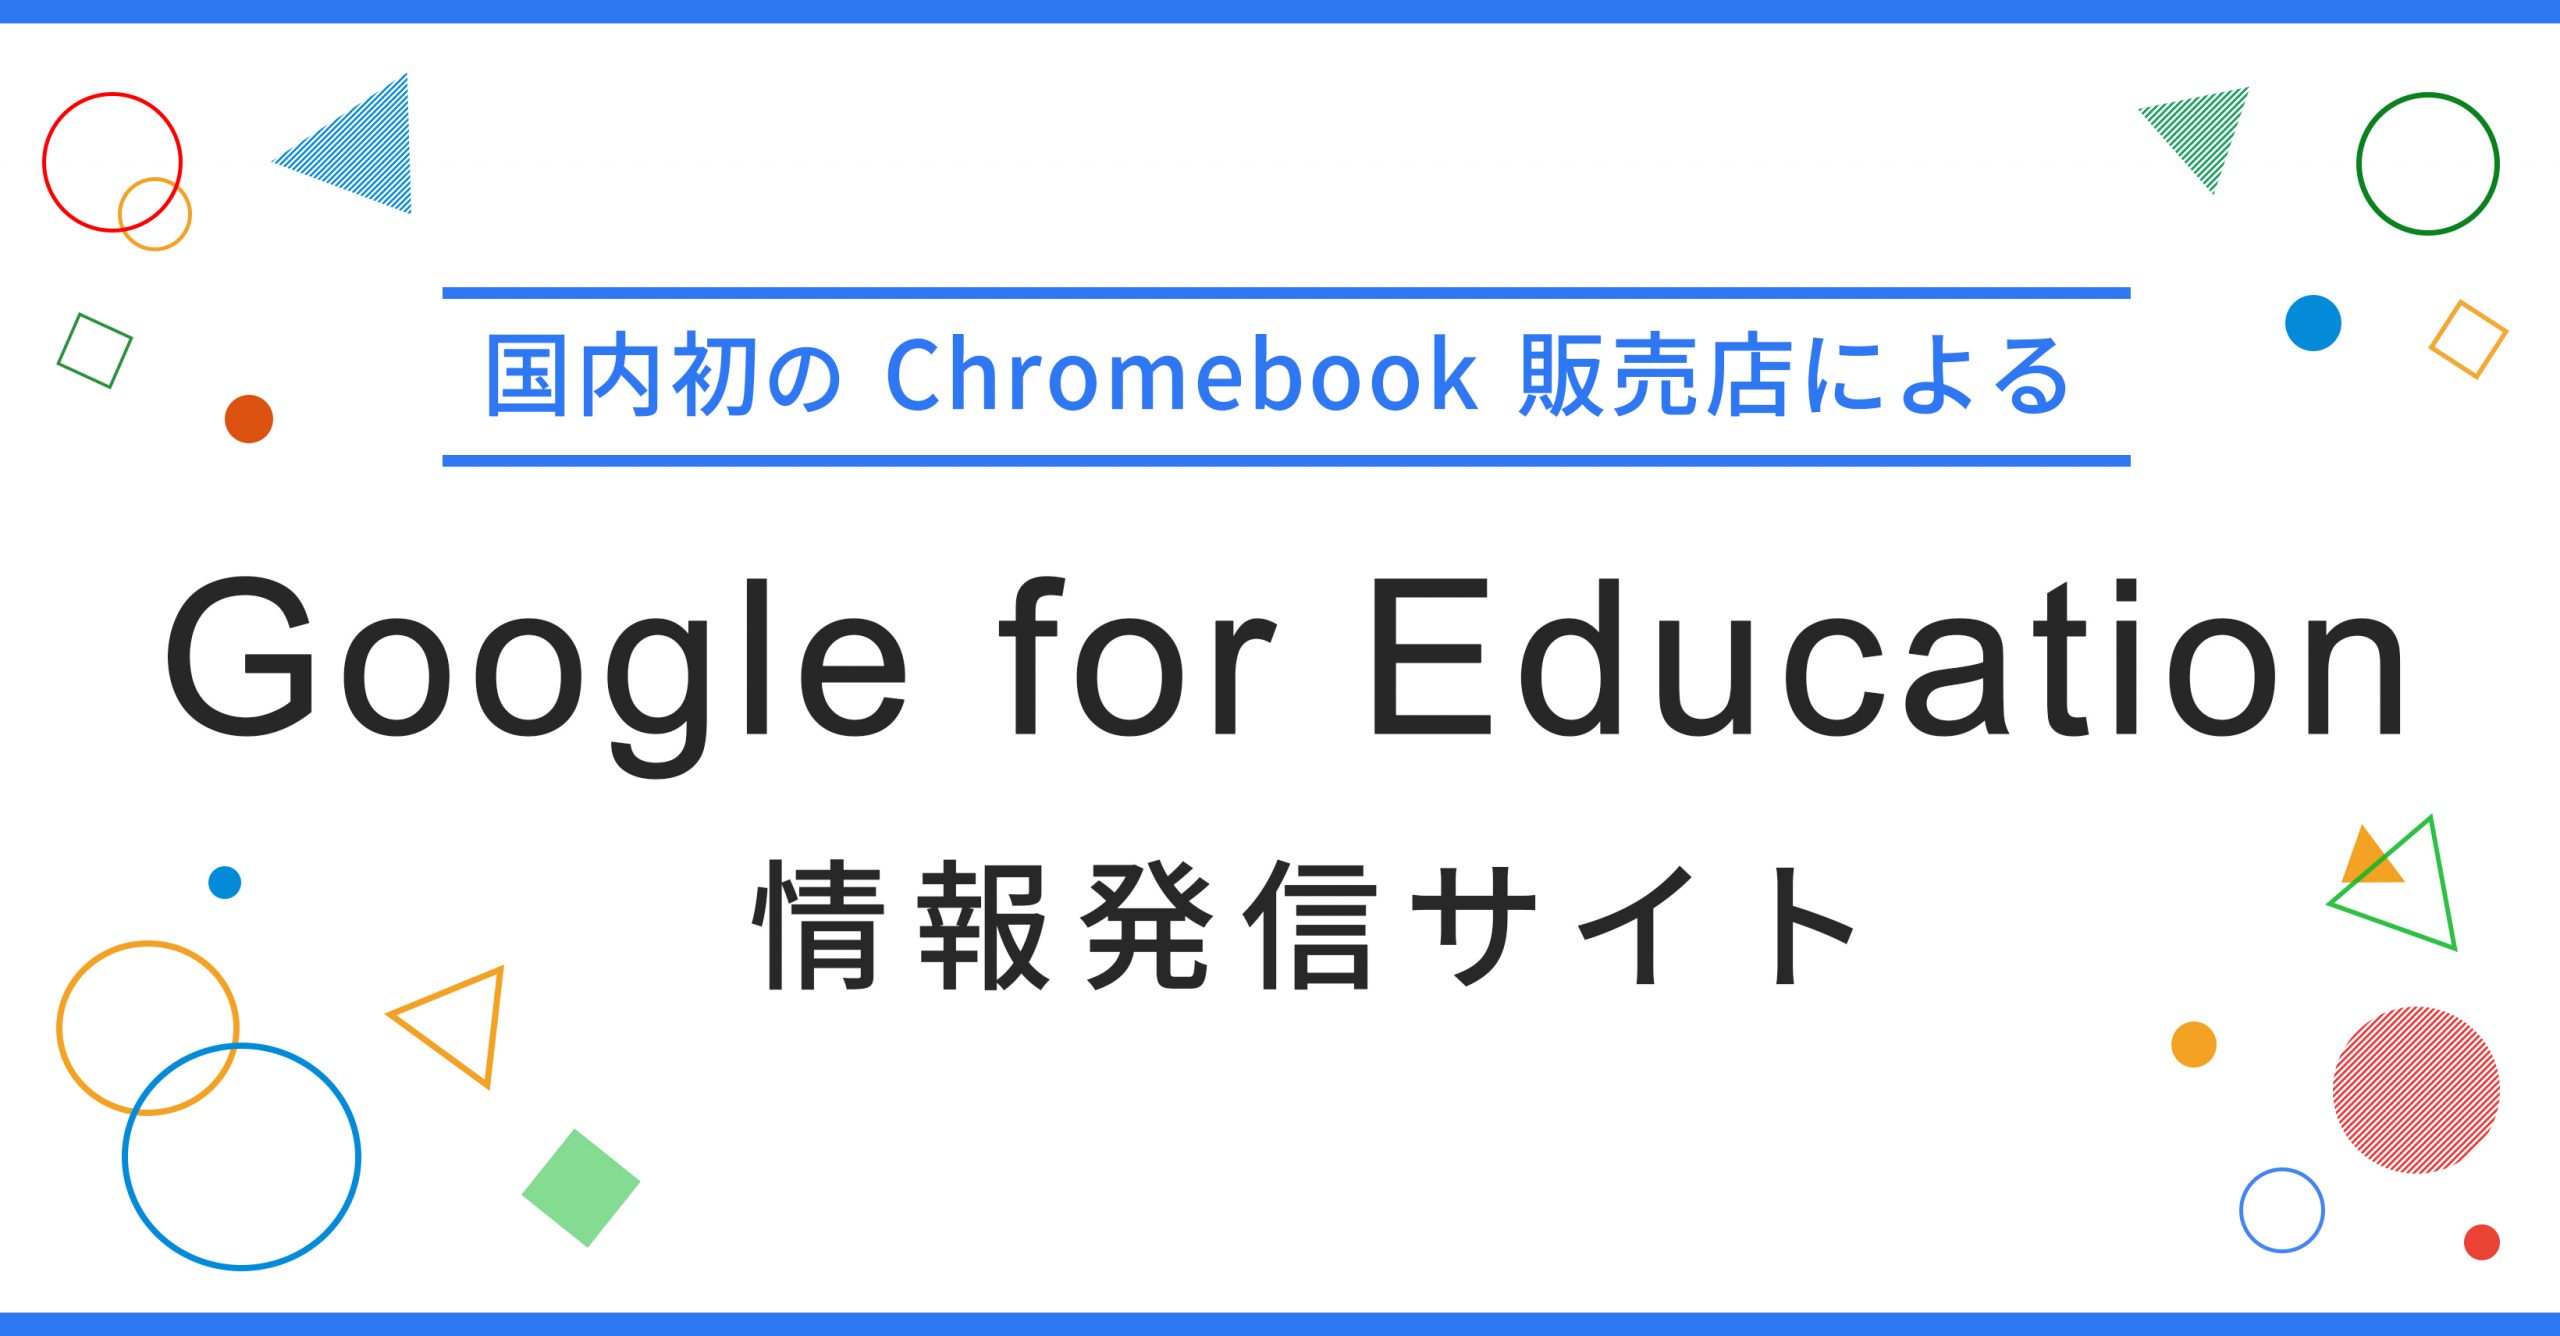 G-Apps.jp - 教育機関向け Google for Education™ 情報発信サイト